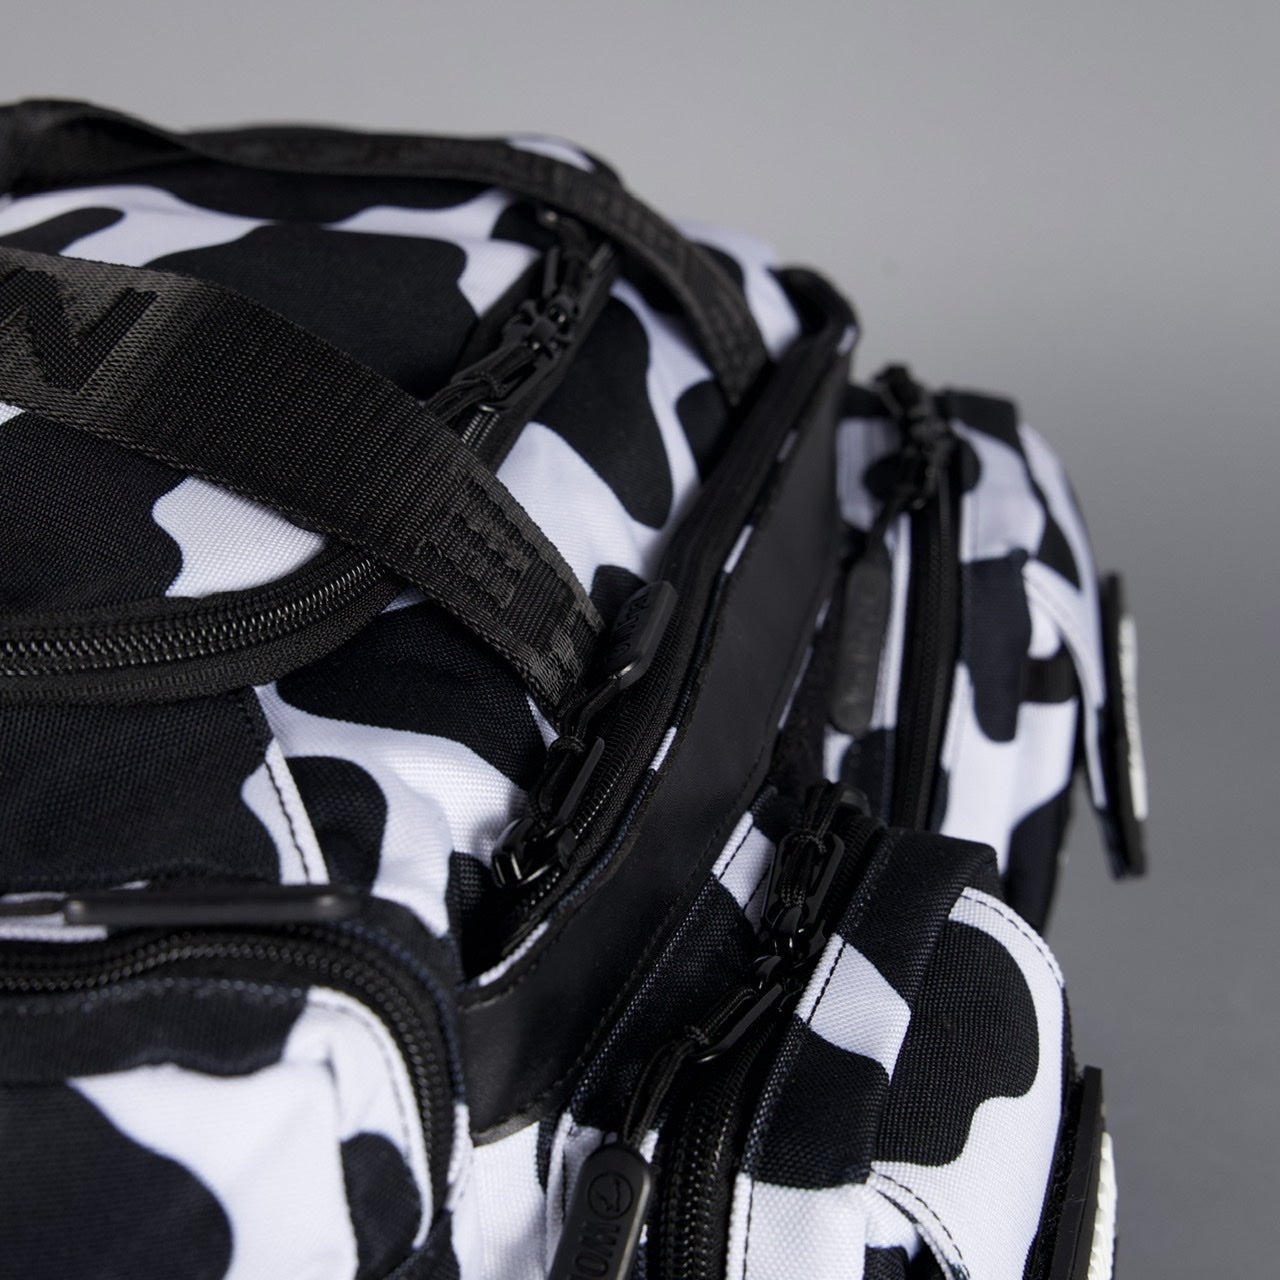 20L Mini Duffle Bag Black White Cow